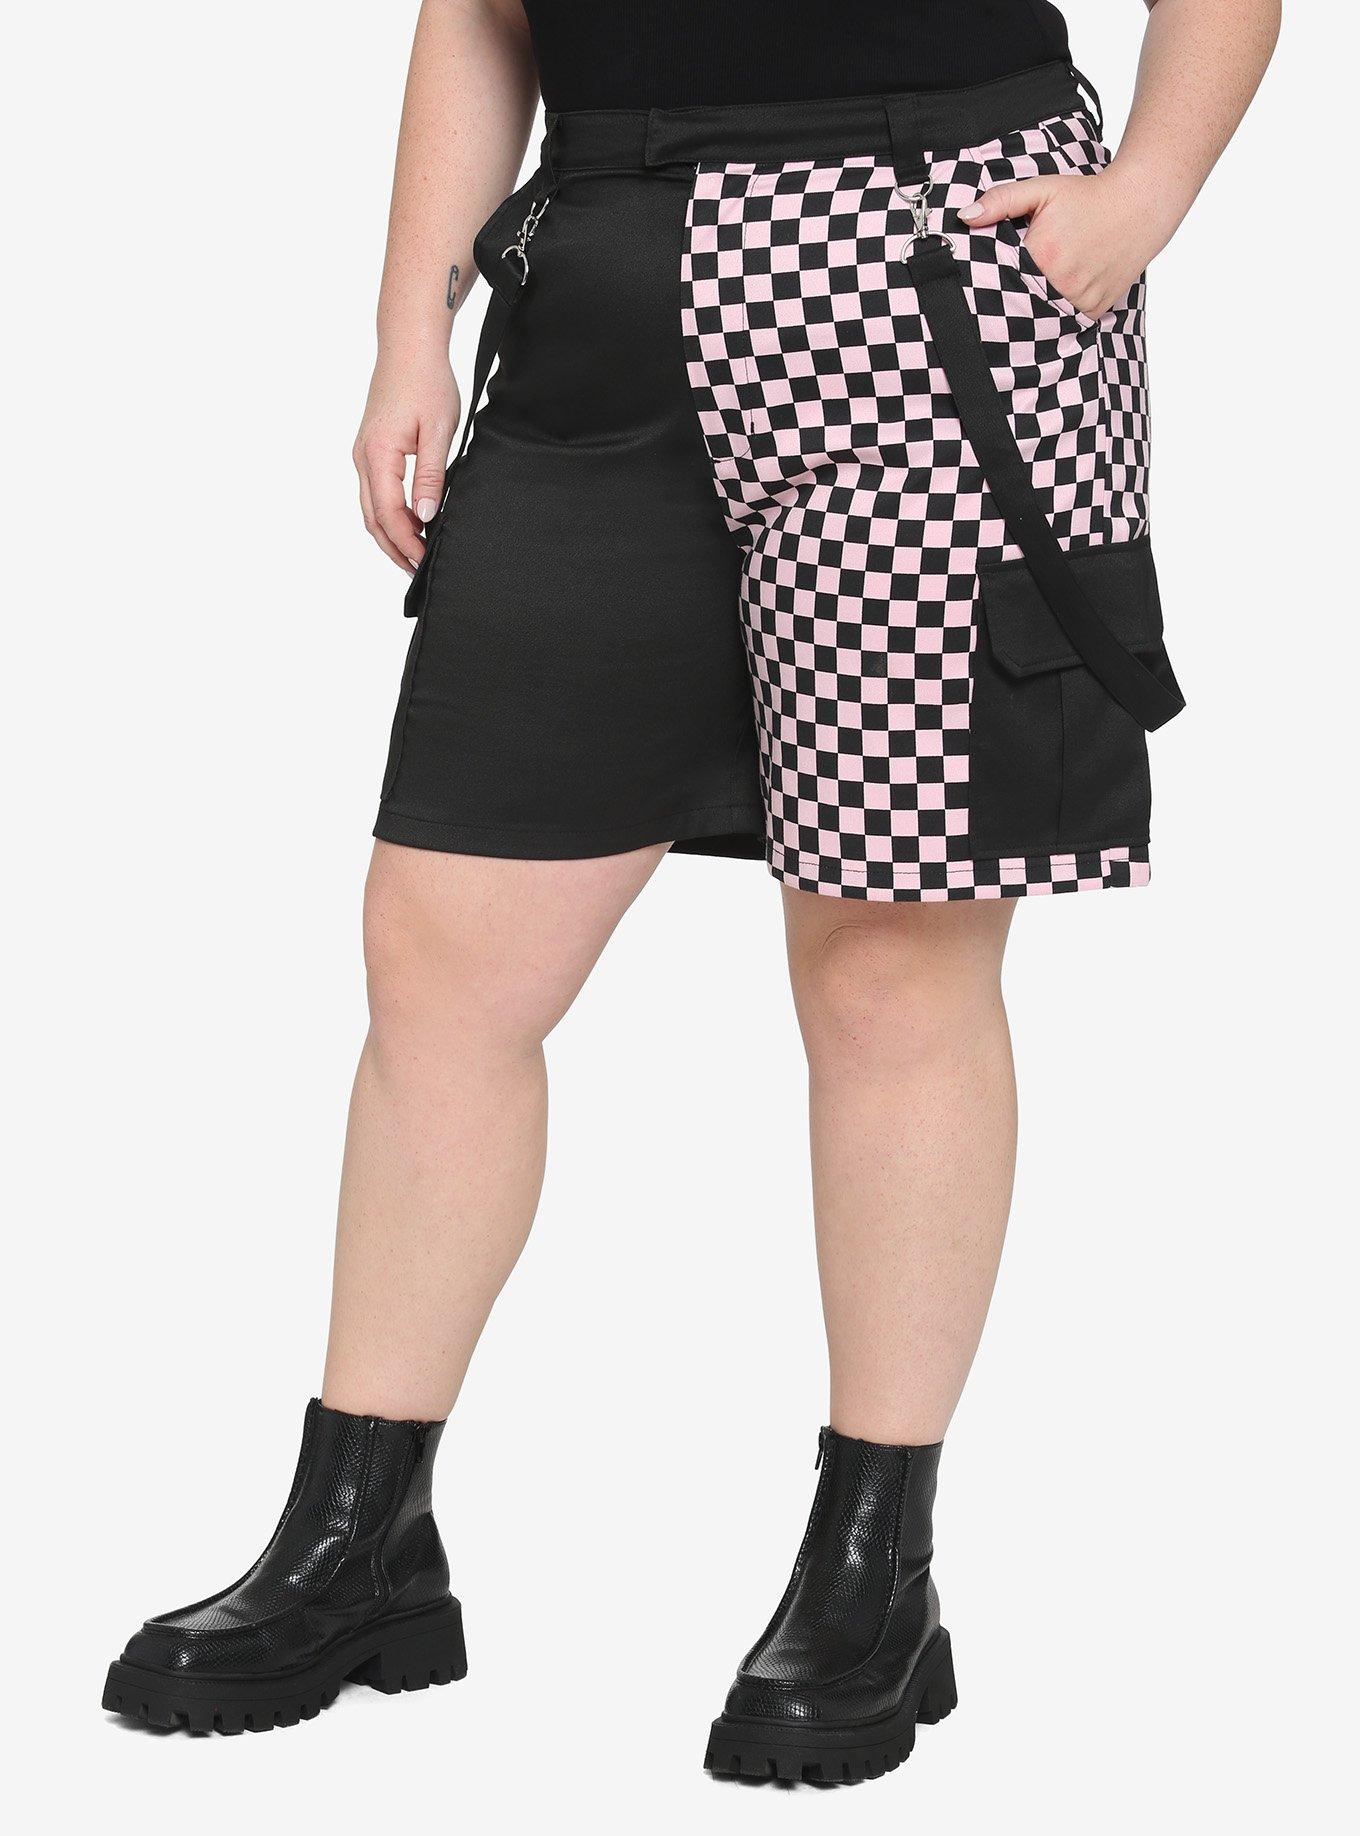 Black & Pink Split Checkered Suspender Shorts Plus Size, LIGHT PINK, hi-res